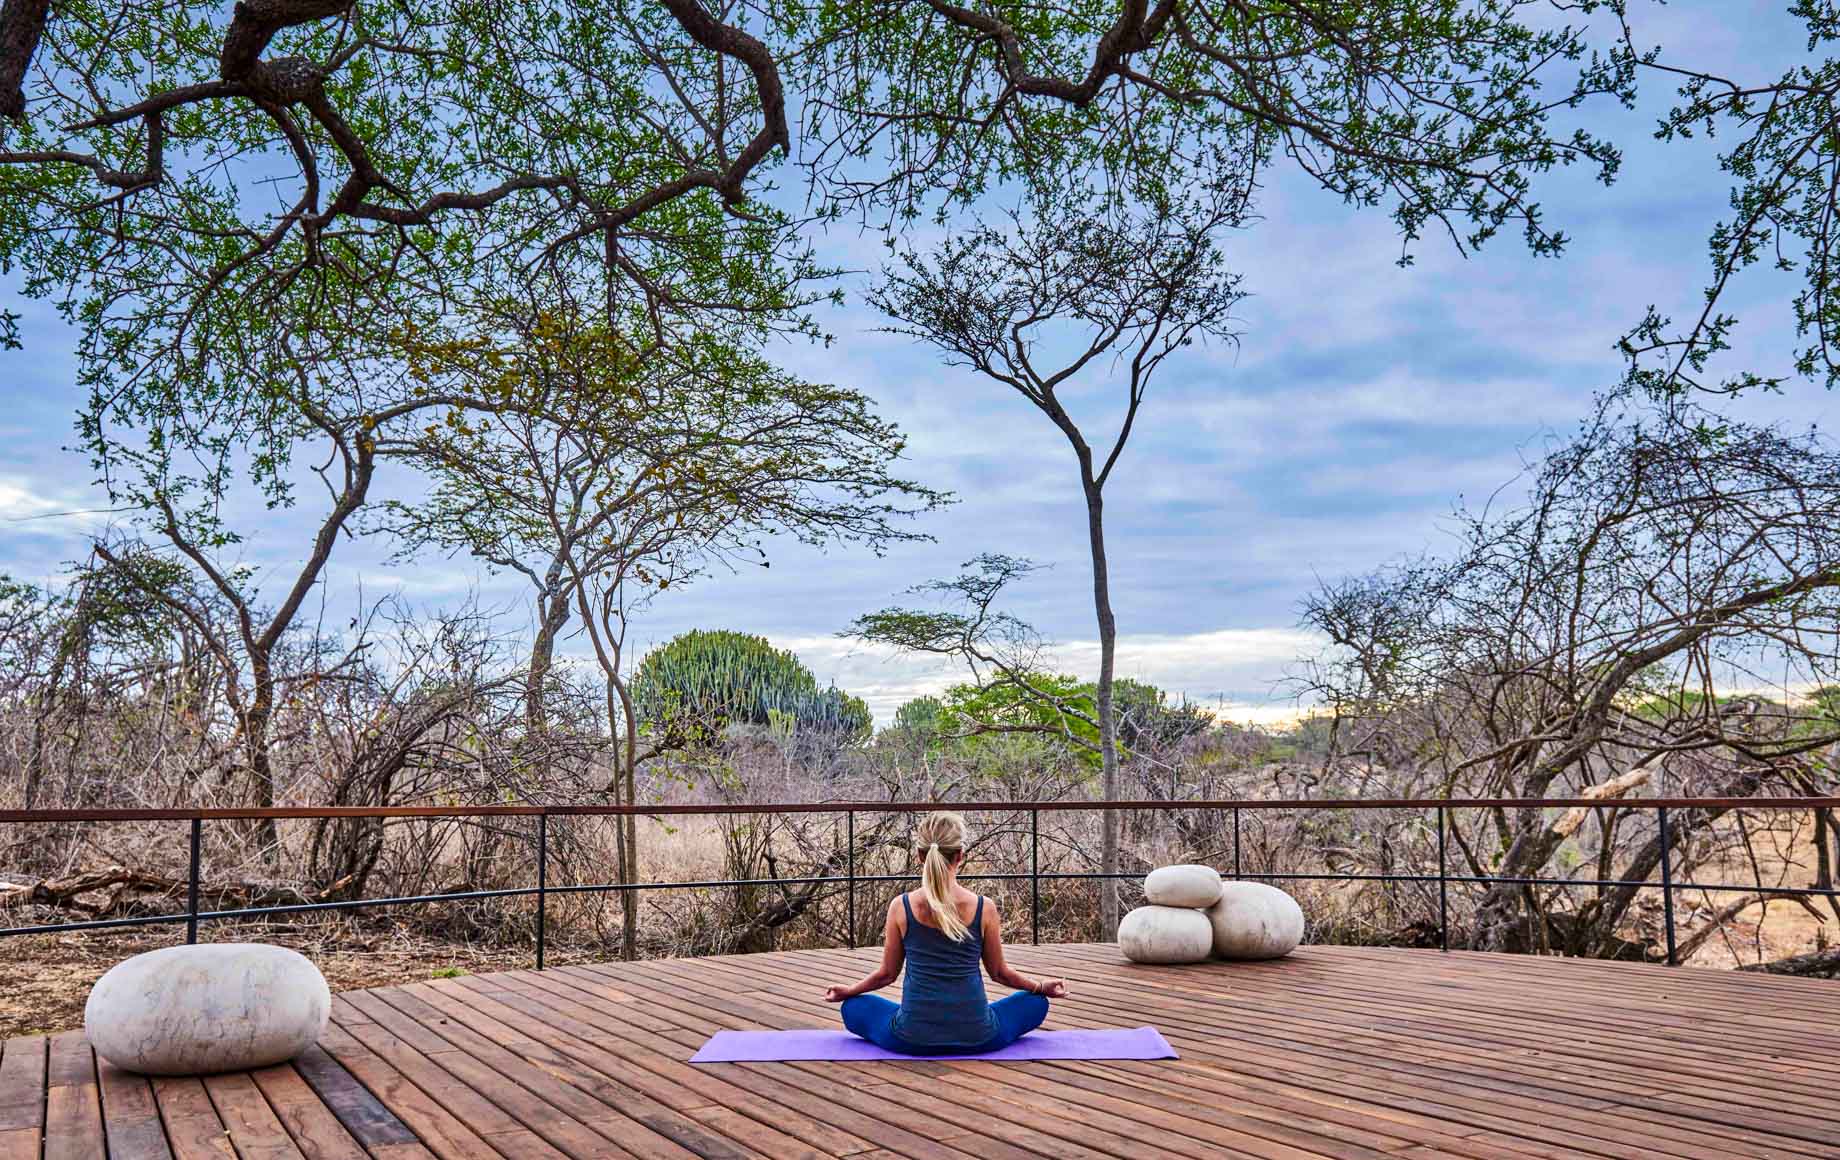 Yoga on lodge decks, Serengeti safari, Tanzania